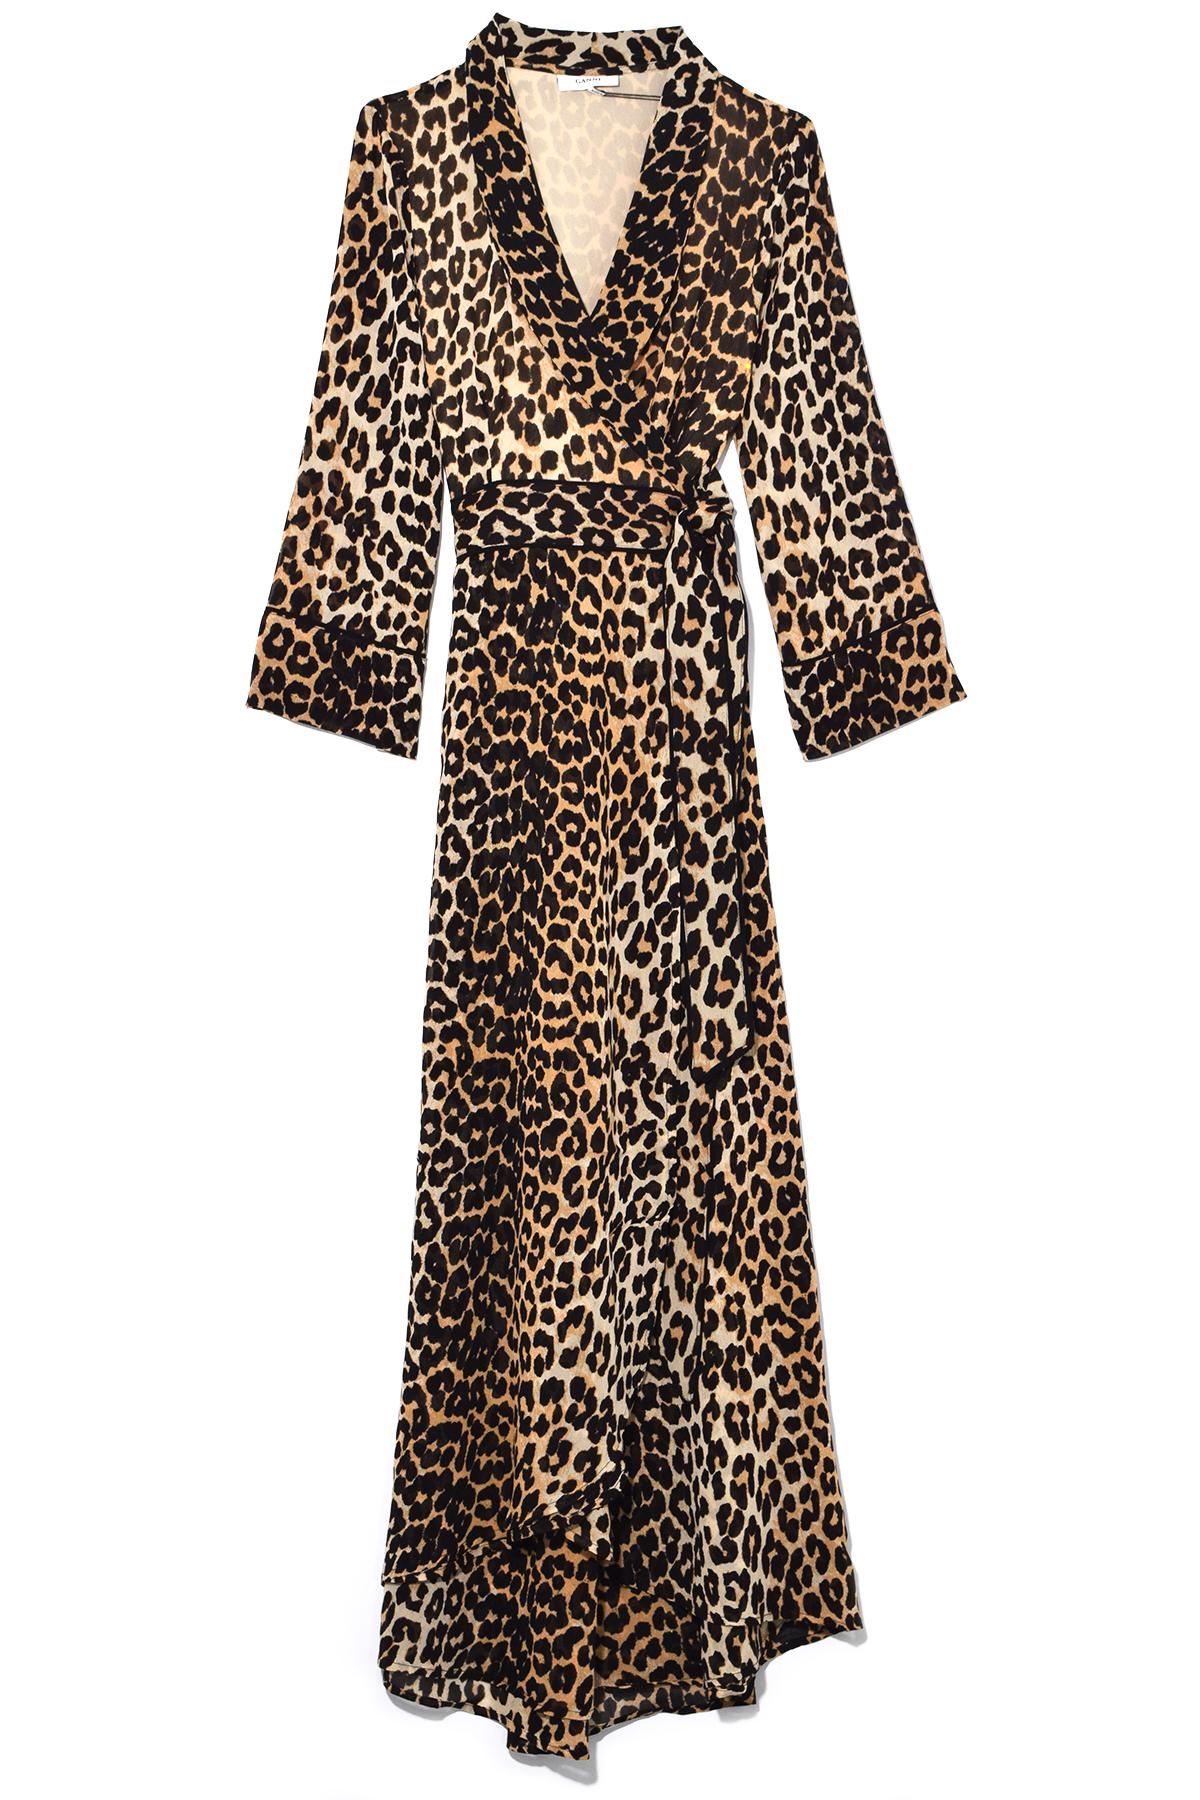 Ganni Synthetic Fairfax Georgette Wrap Dress In Leopard - Lyst